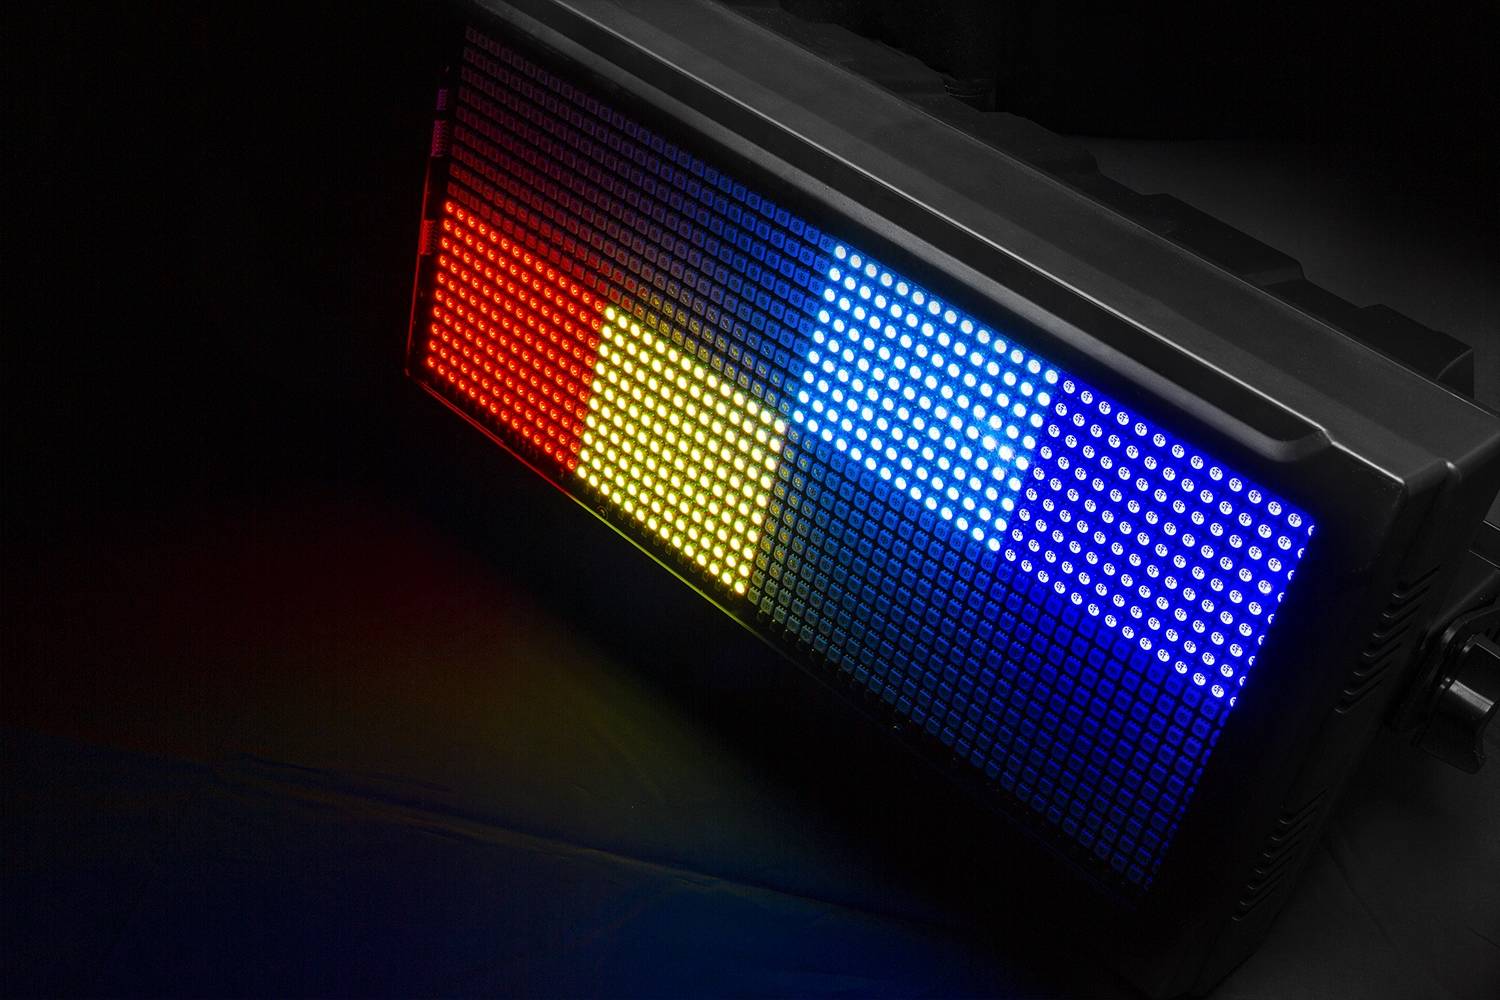  Stroboscoop Blinder LED BS1200 RGB Beamz